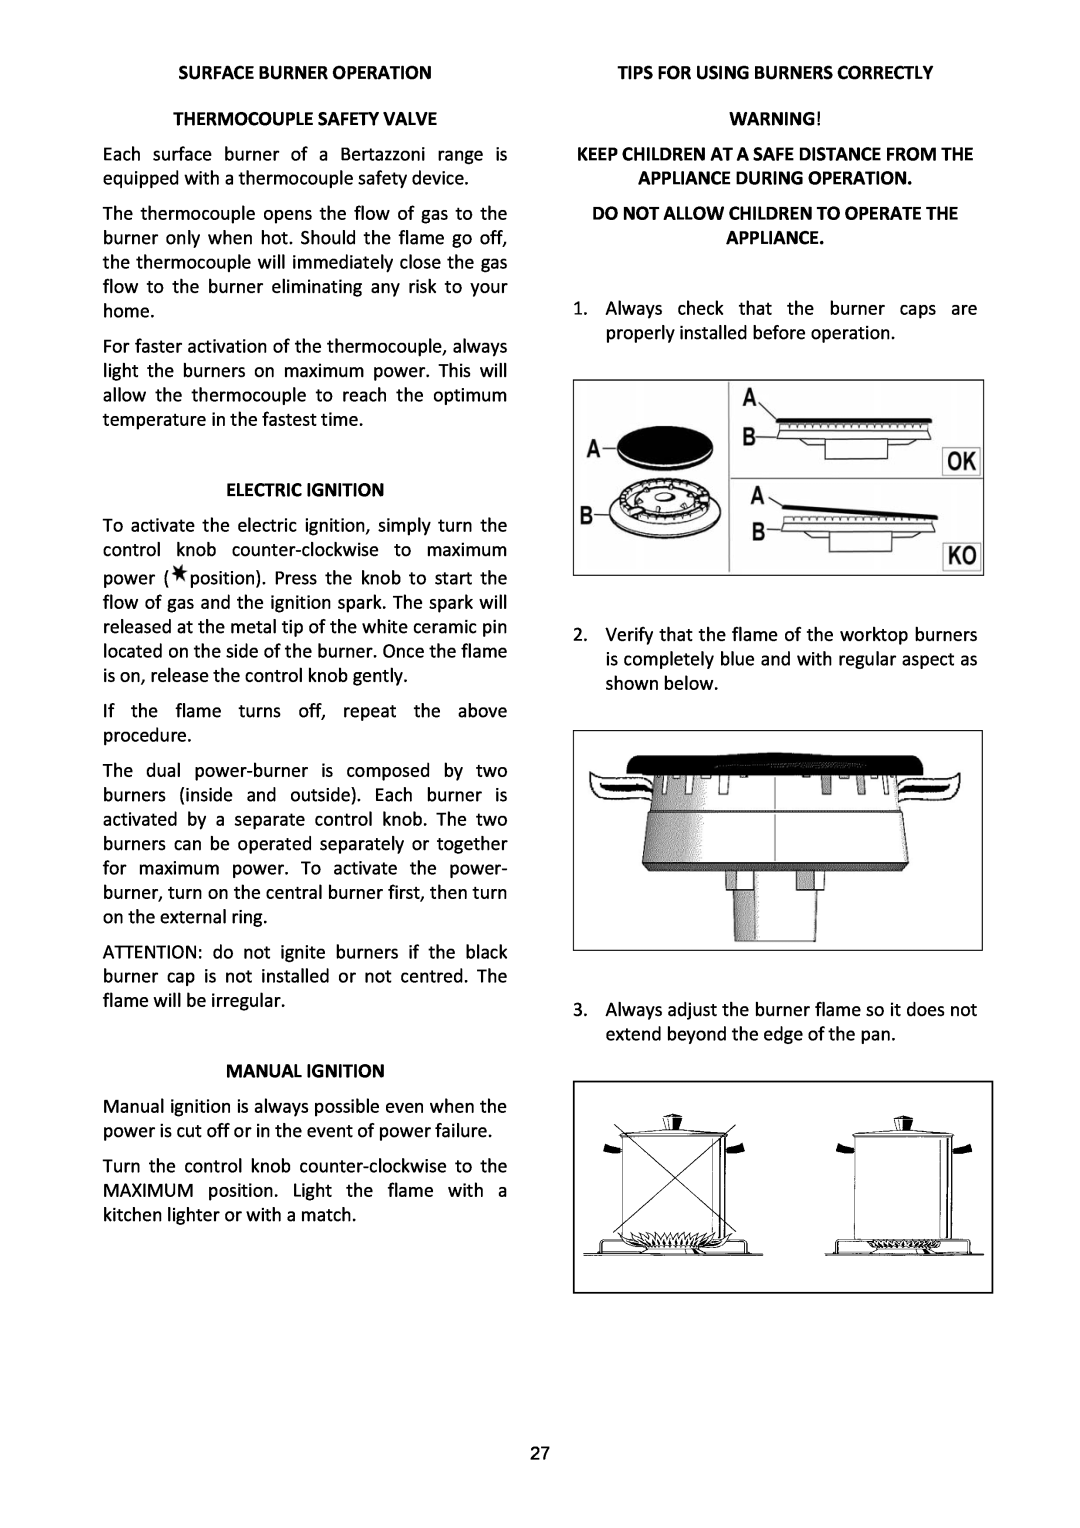 Bertazzoni X)486GPIRCR, X)486GPIRX Surface Burner Operation Thermocouple Safety Valve, Electric Ignition, Manual Ignition 